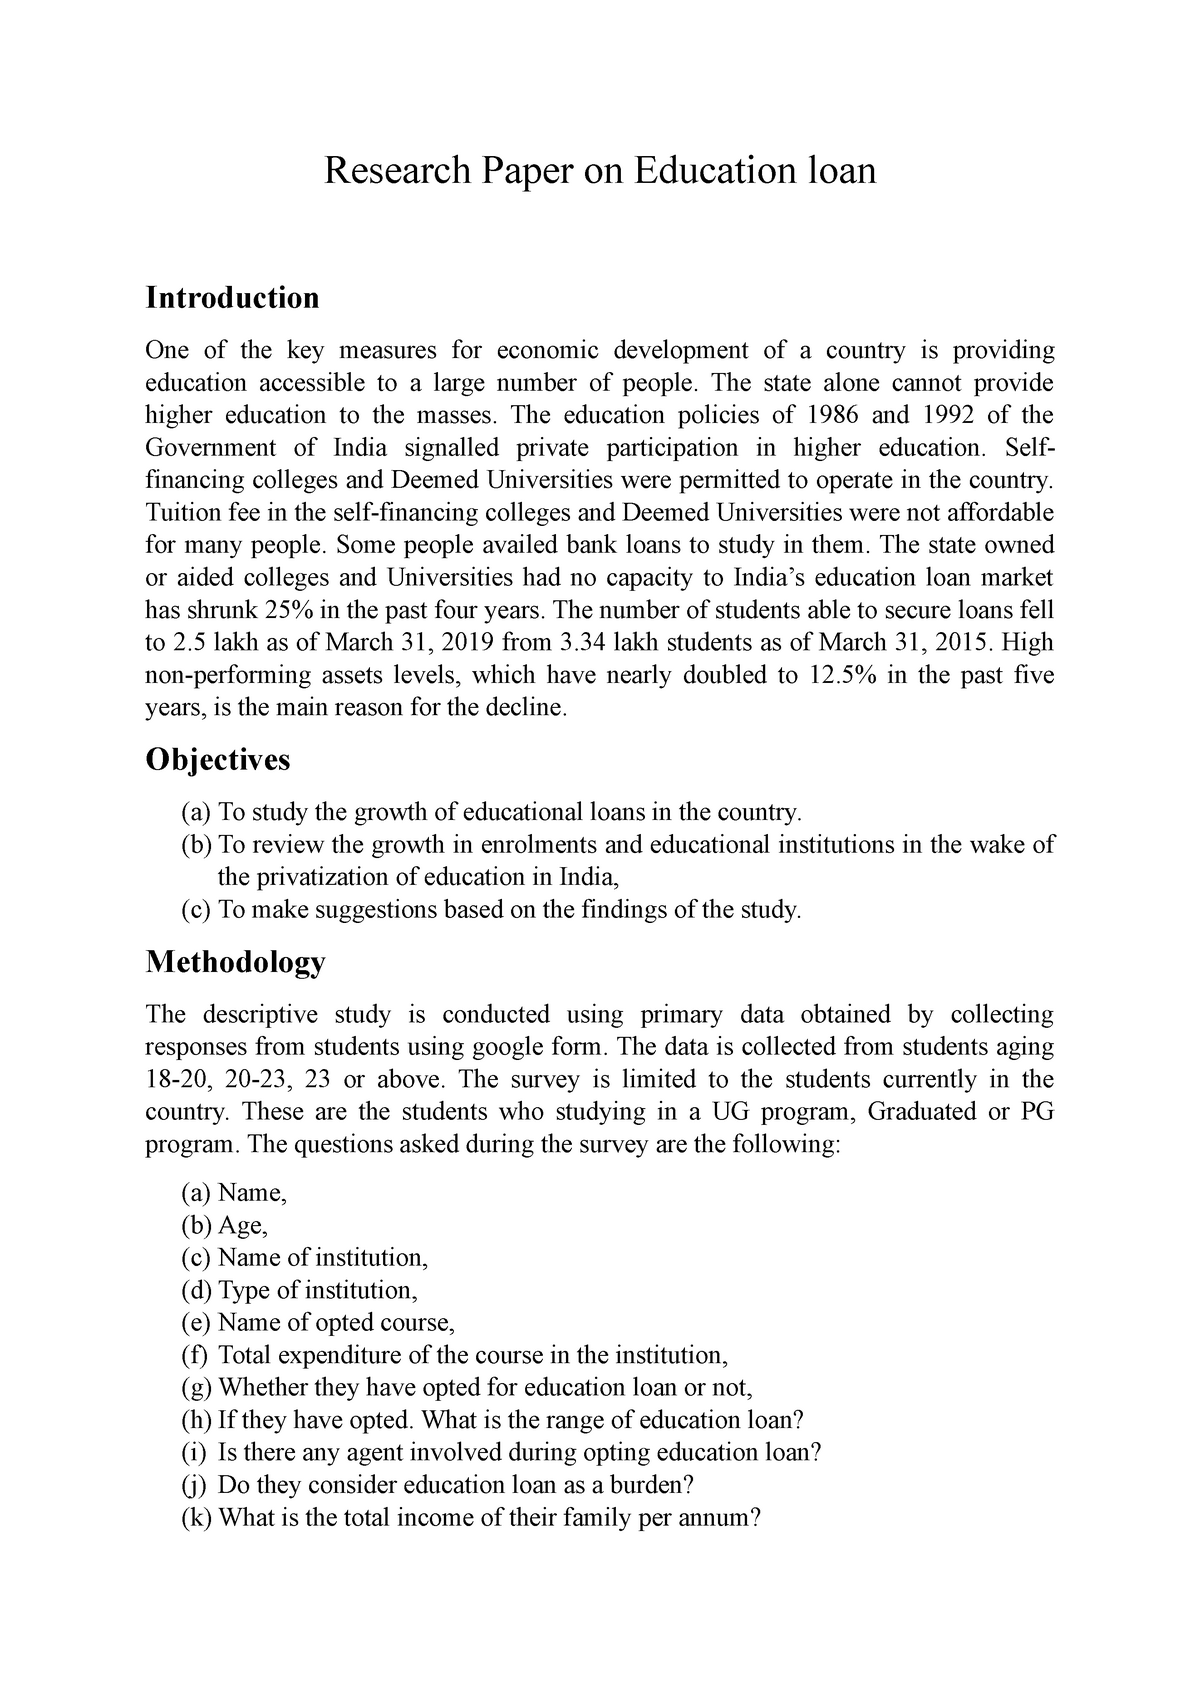 research paper on education loan in pdf